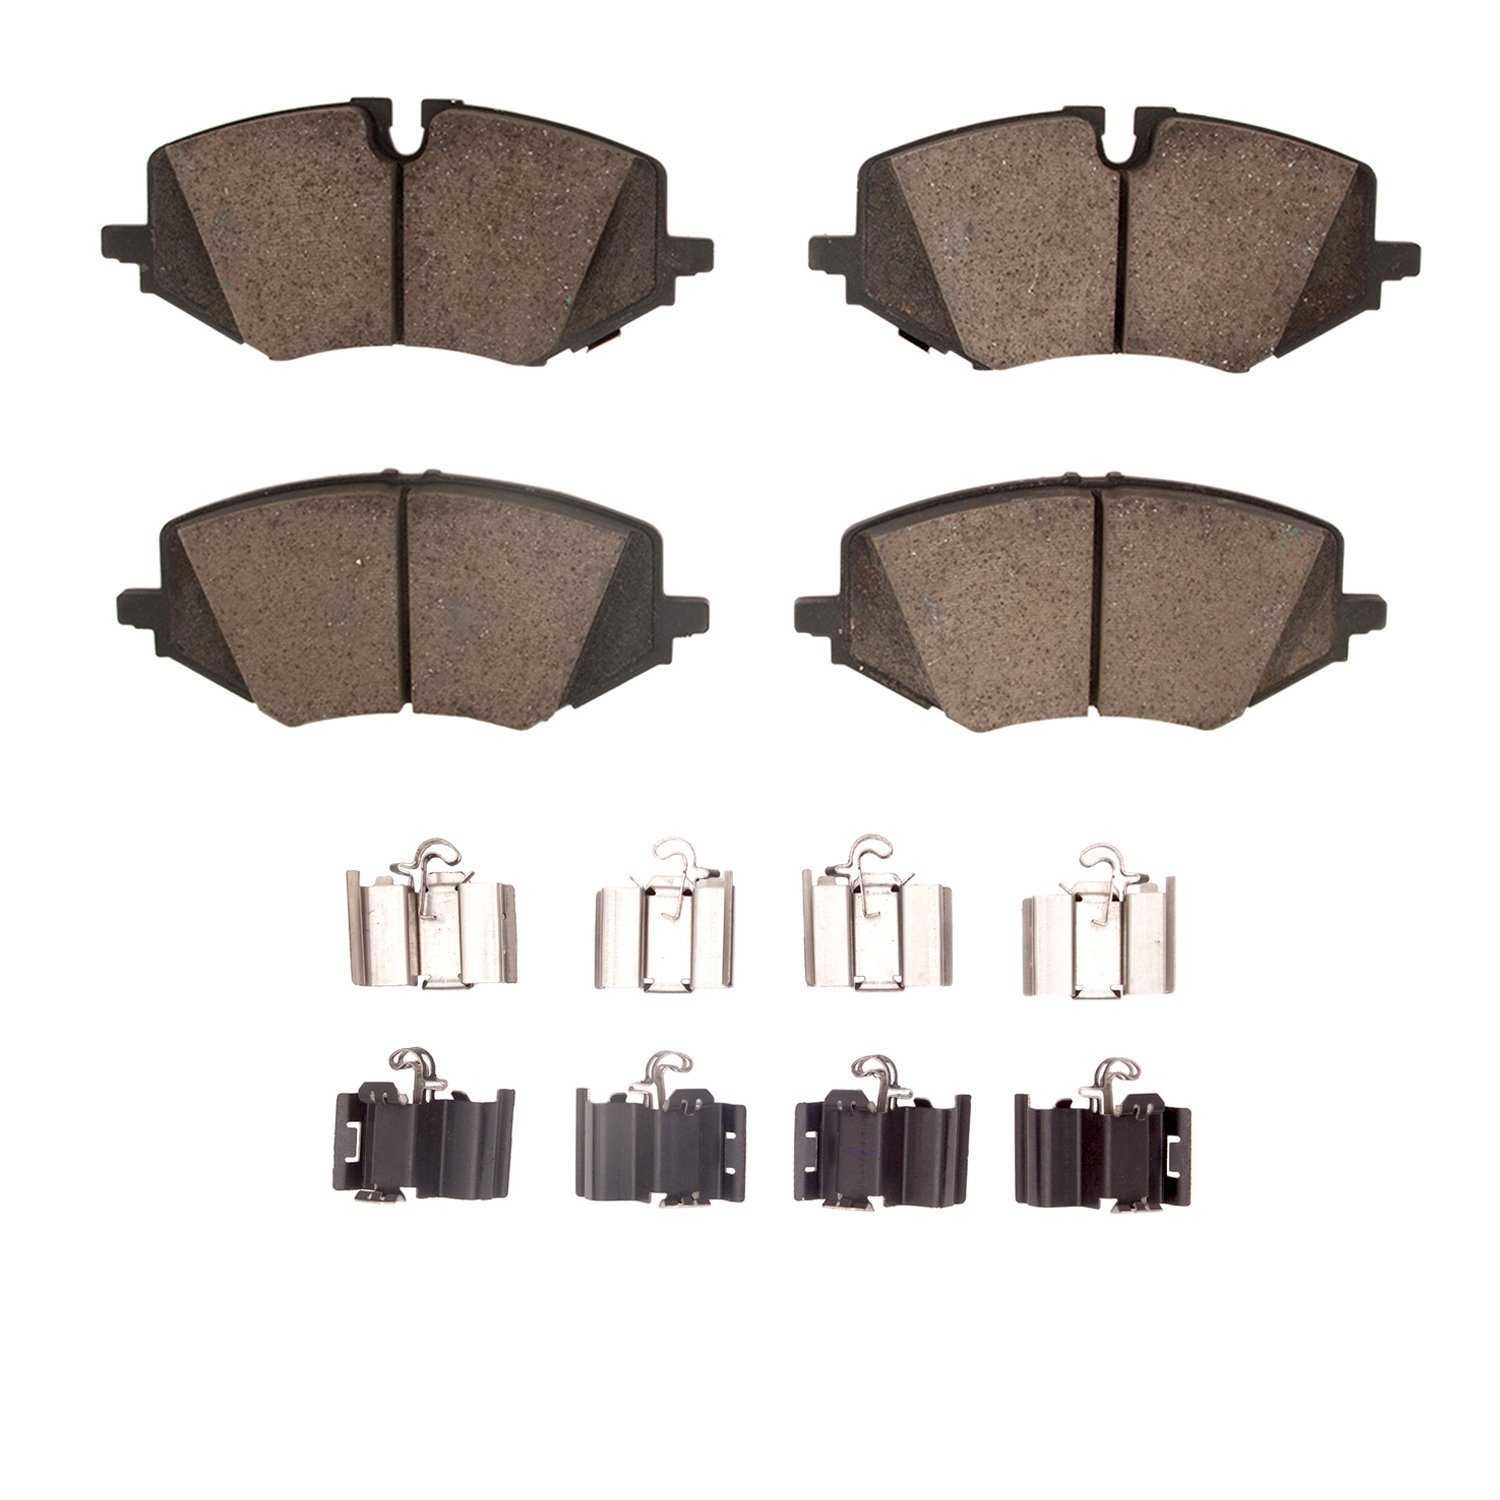 1310-2307-01 3000-Series Ceramic Brake Pads & Hardware Kit, Fits Select GM, Position: Front